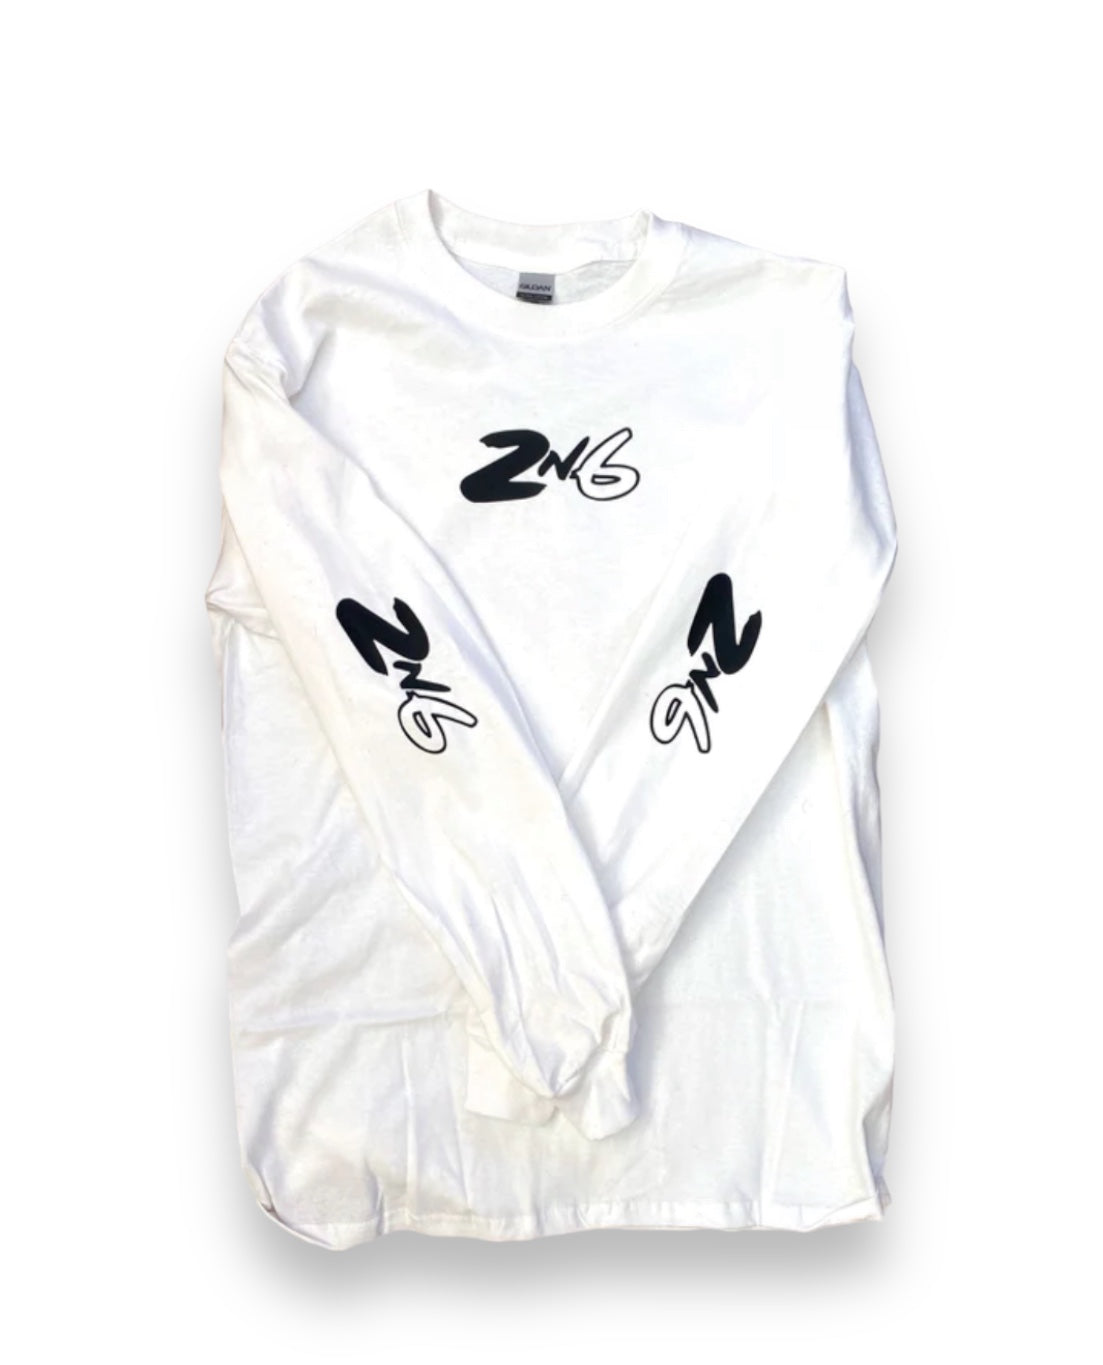 2N6 Sports white long sleeve shirt